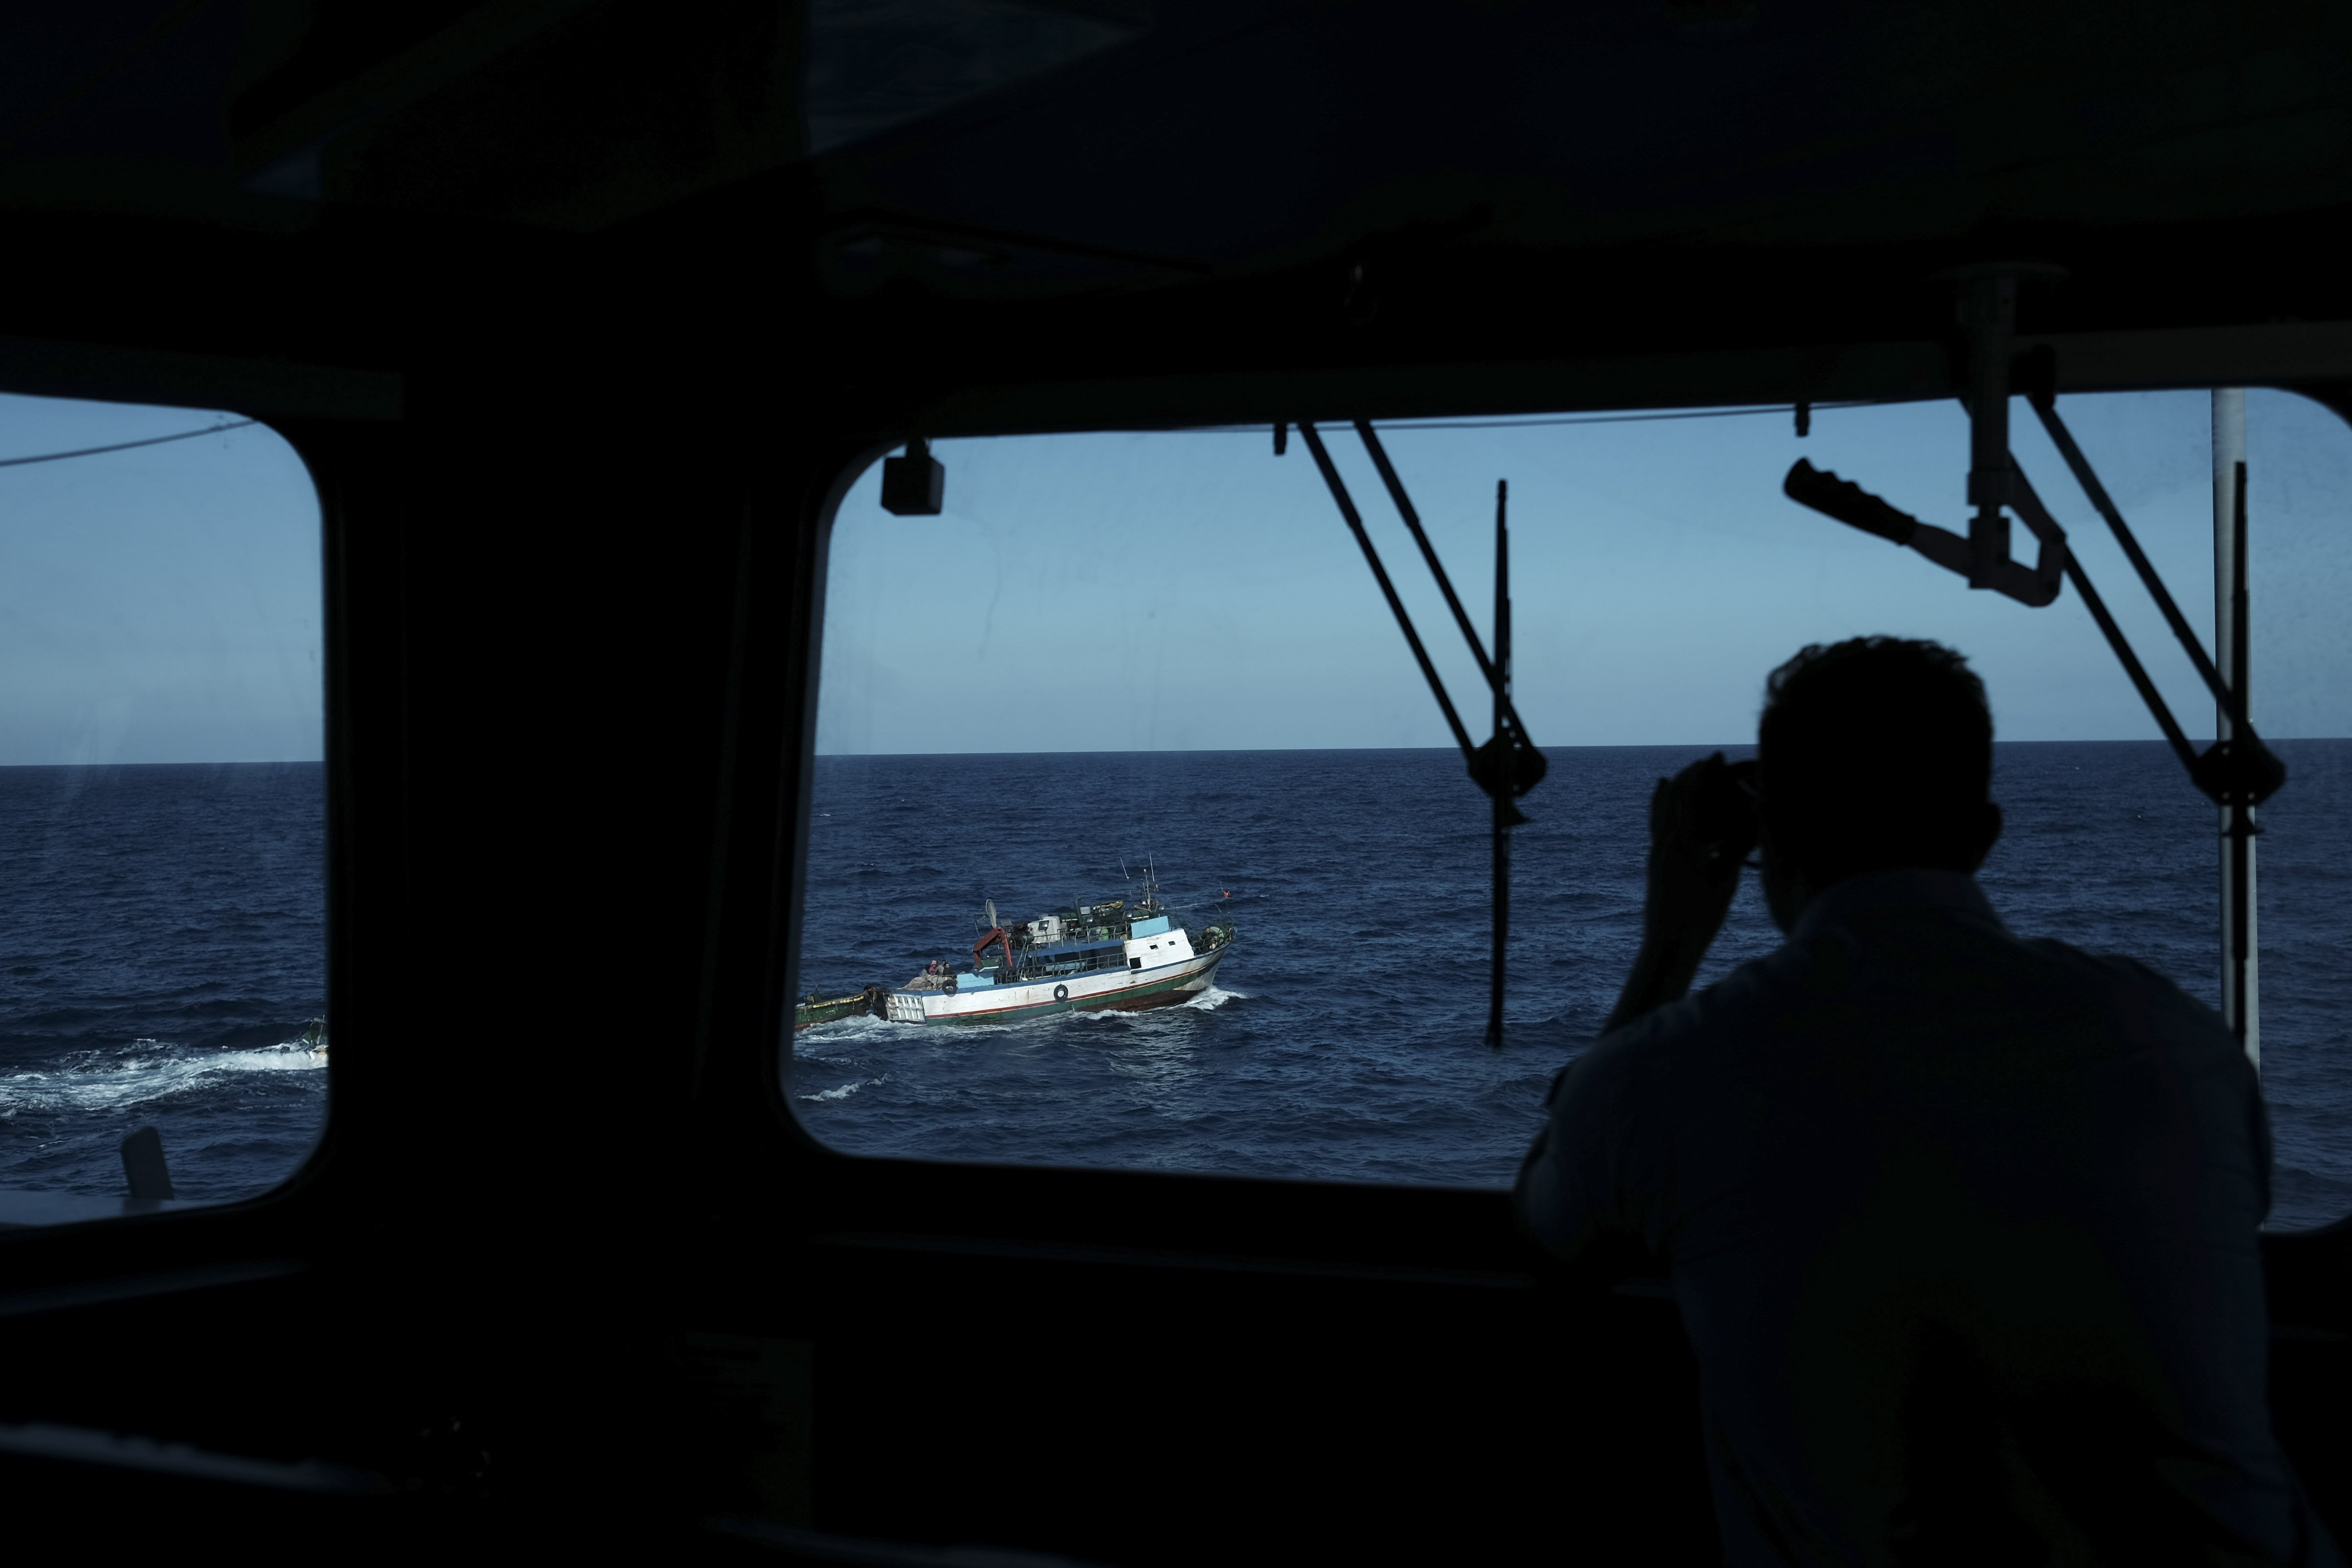 Fragata da Marinha portuguesa resgata 138 migrantes ao largo de Lampedusa, Itália